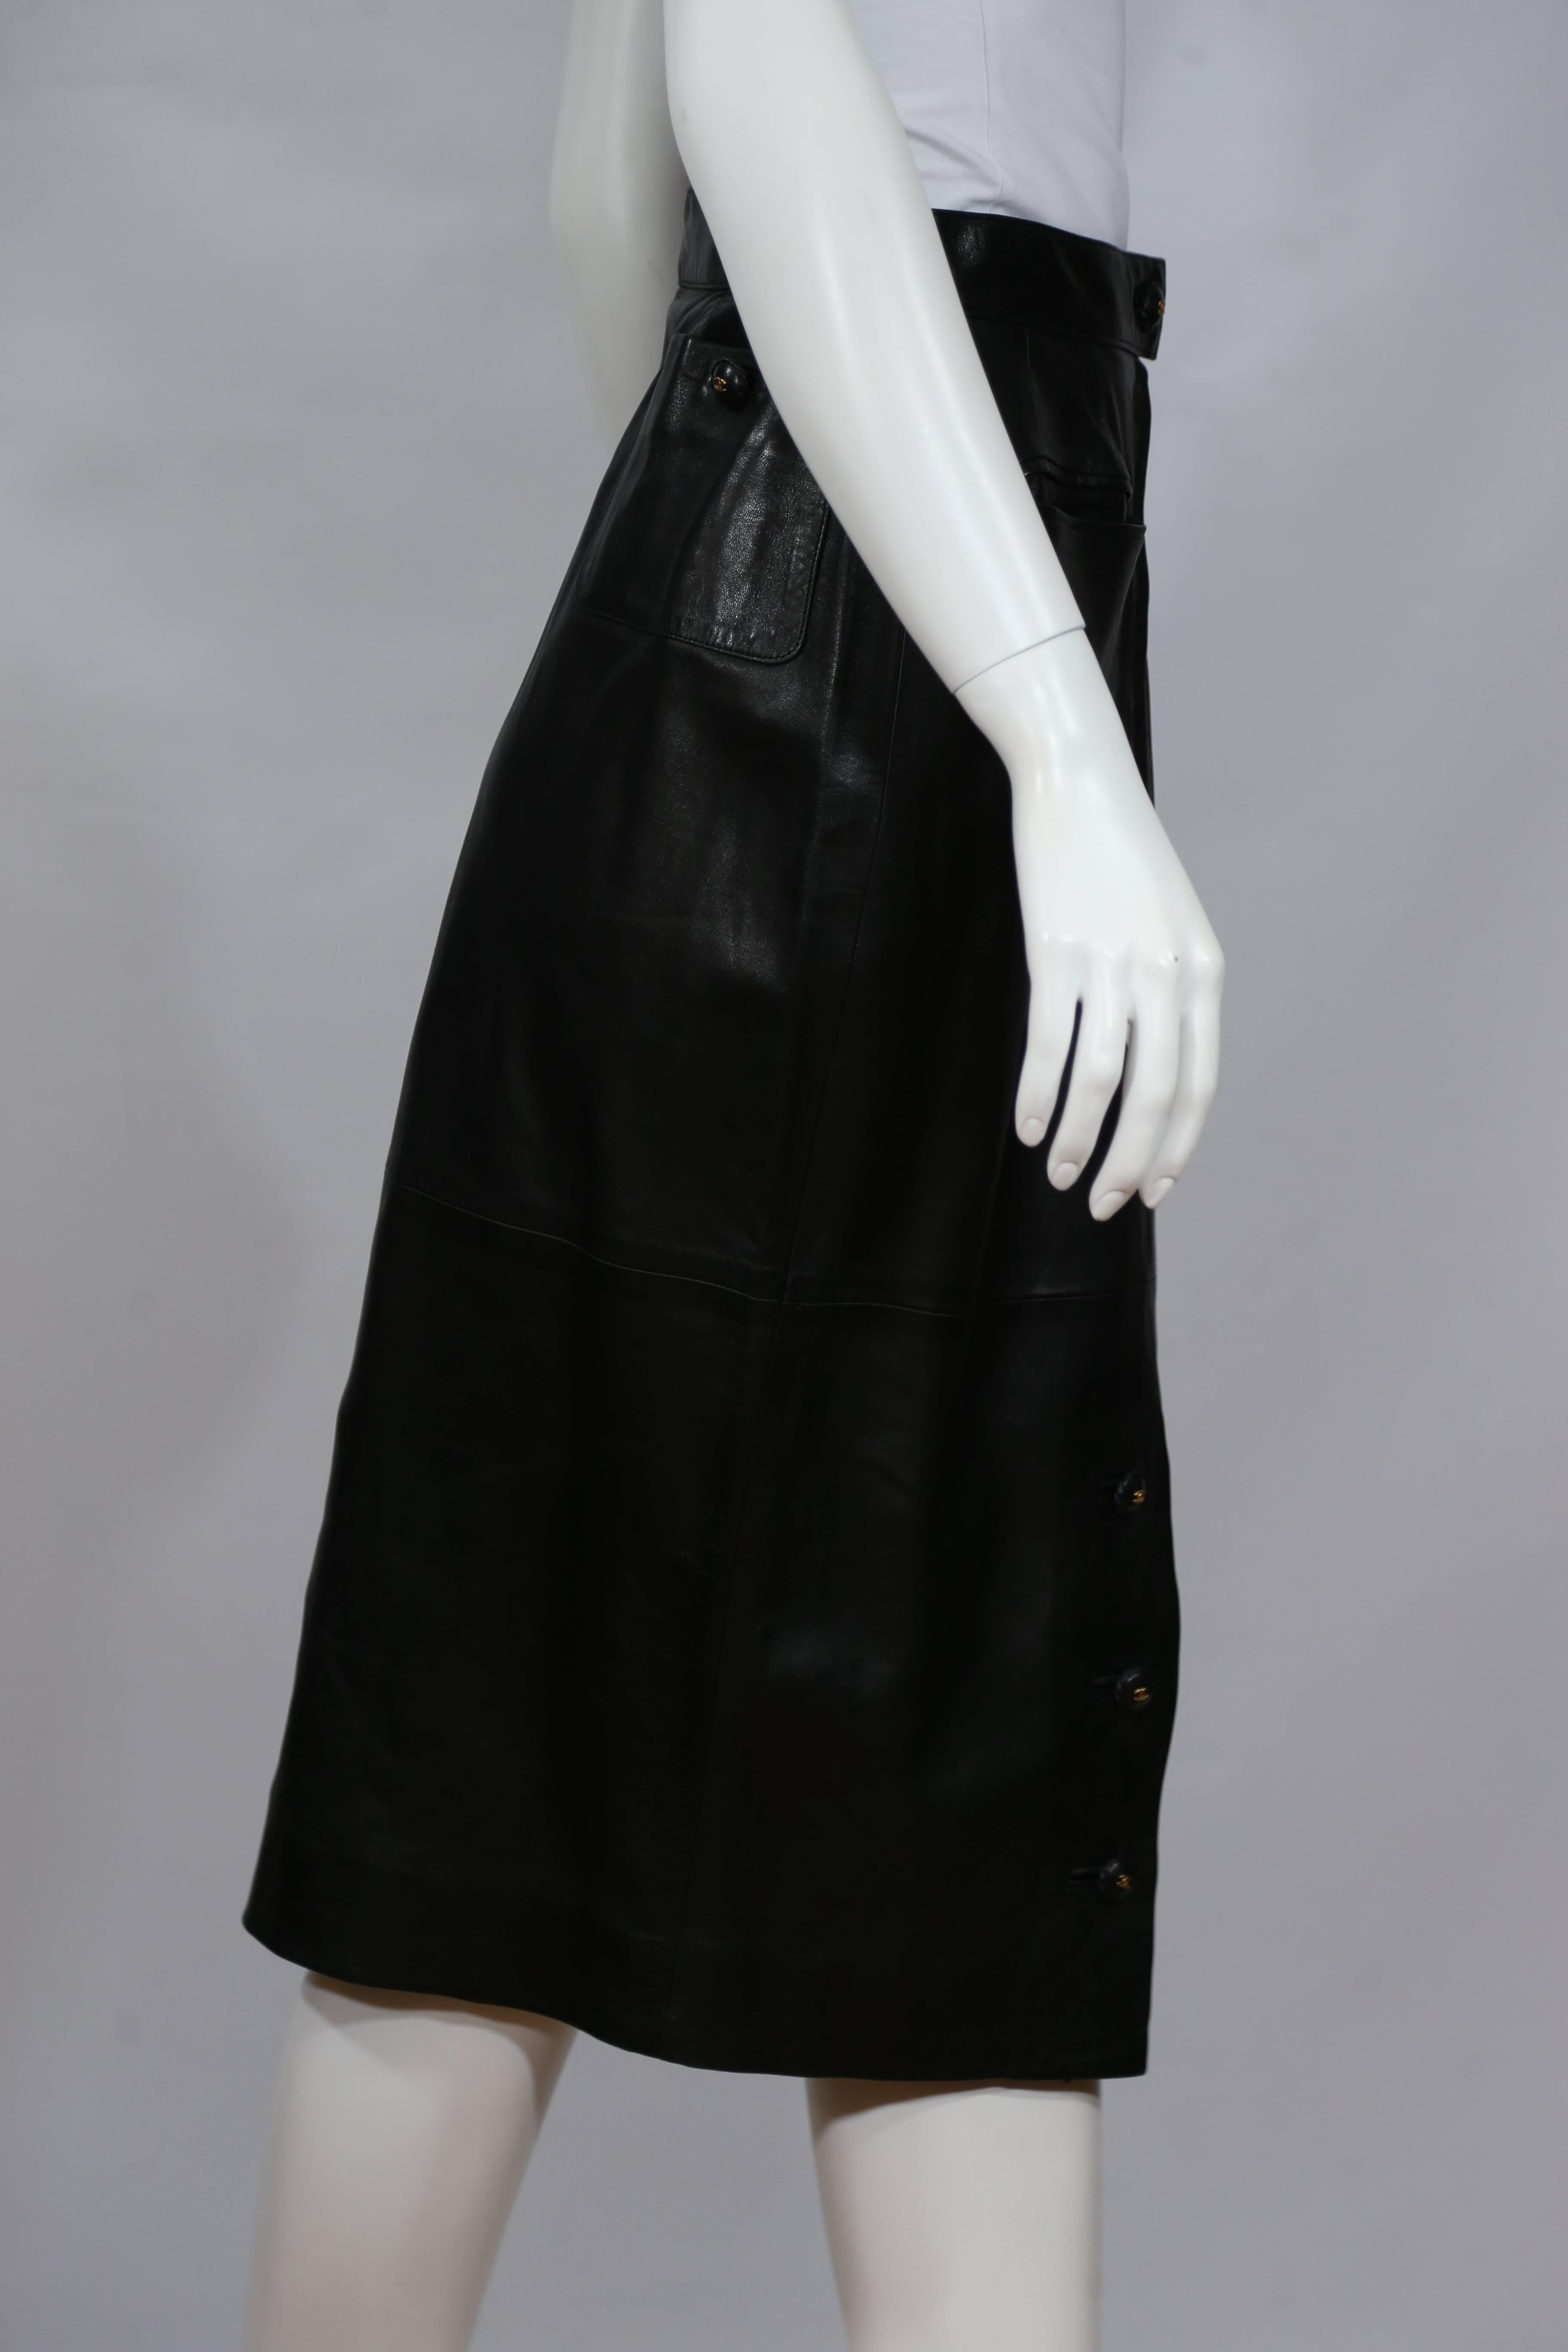 Women's Chanel Black Leather Pencil Skirt